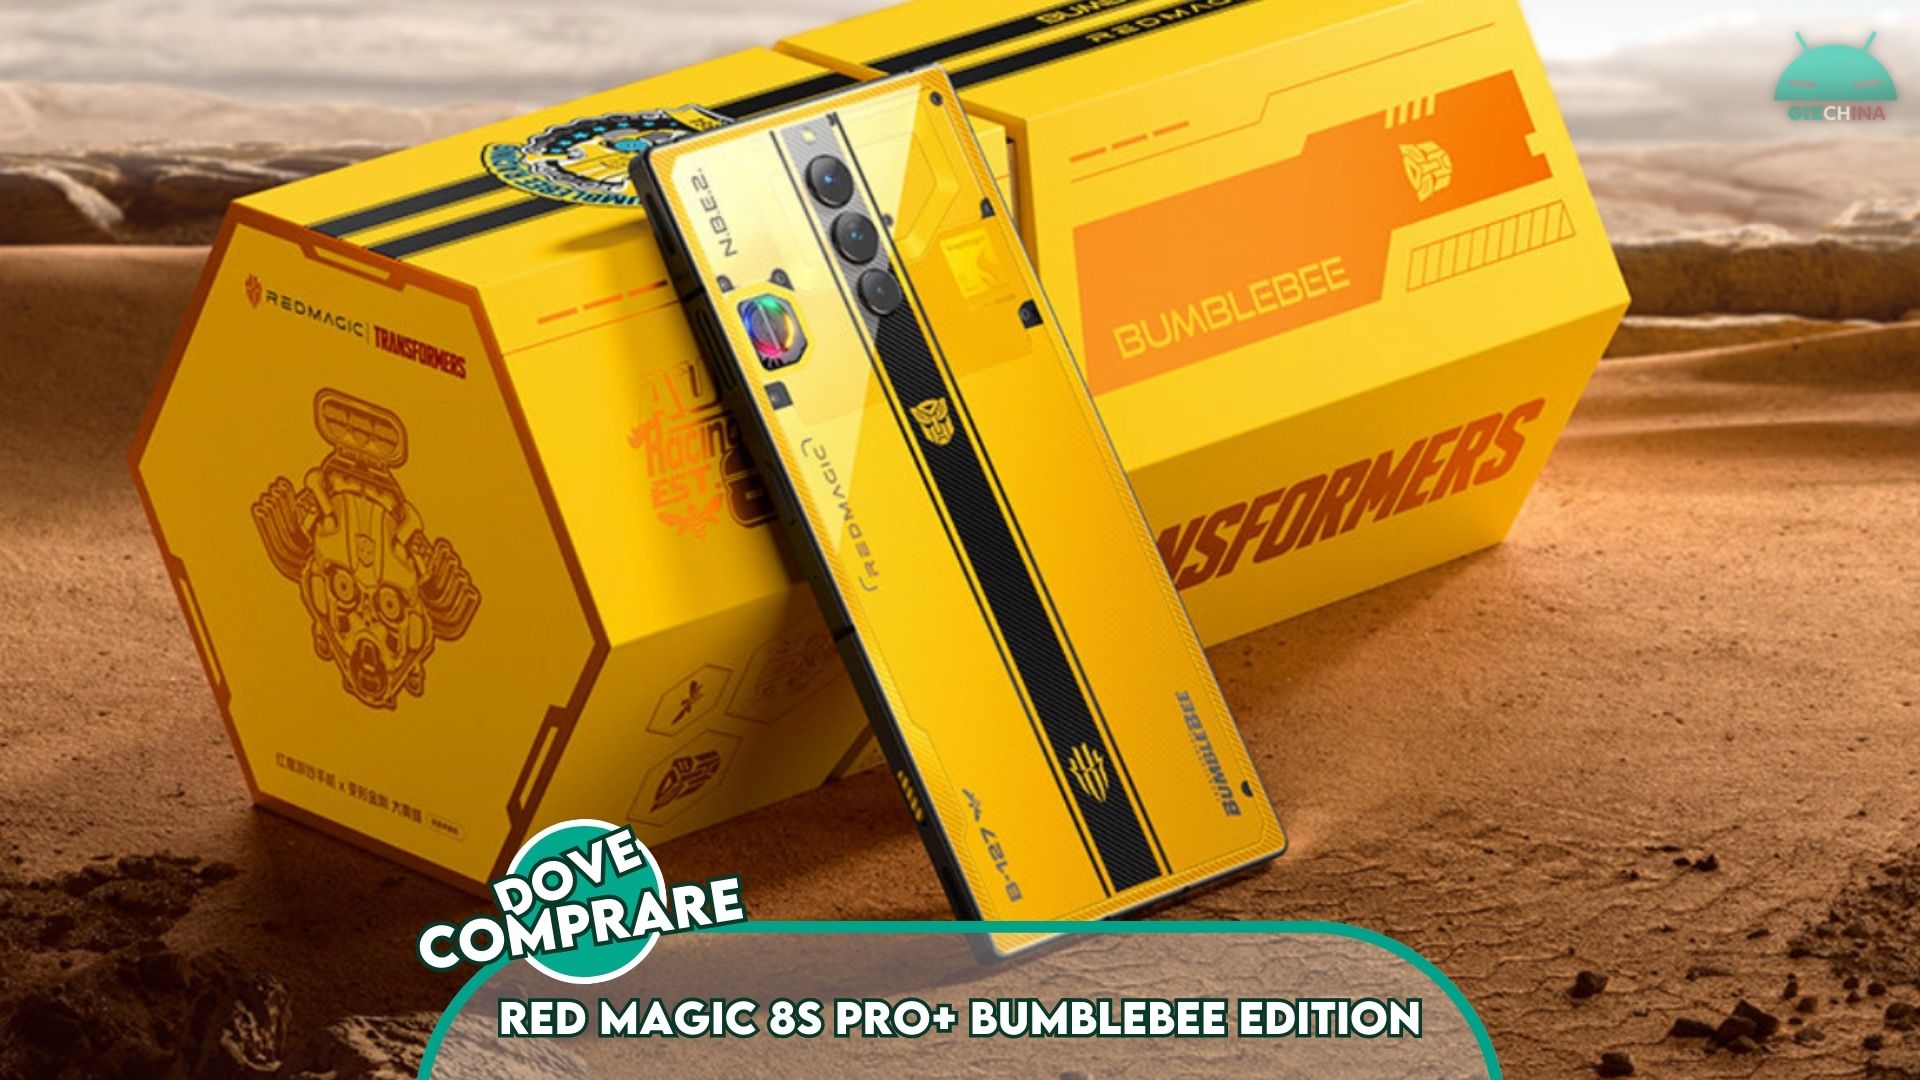 Red Magic 8s Pro Bumblebee. Red Magic 8 Pro Бамблби. Red Magic Bumblebee Edition. Red Magic 8s Pro Bumblebee Limited Edition.